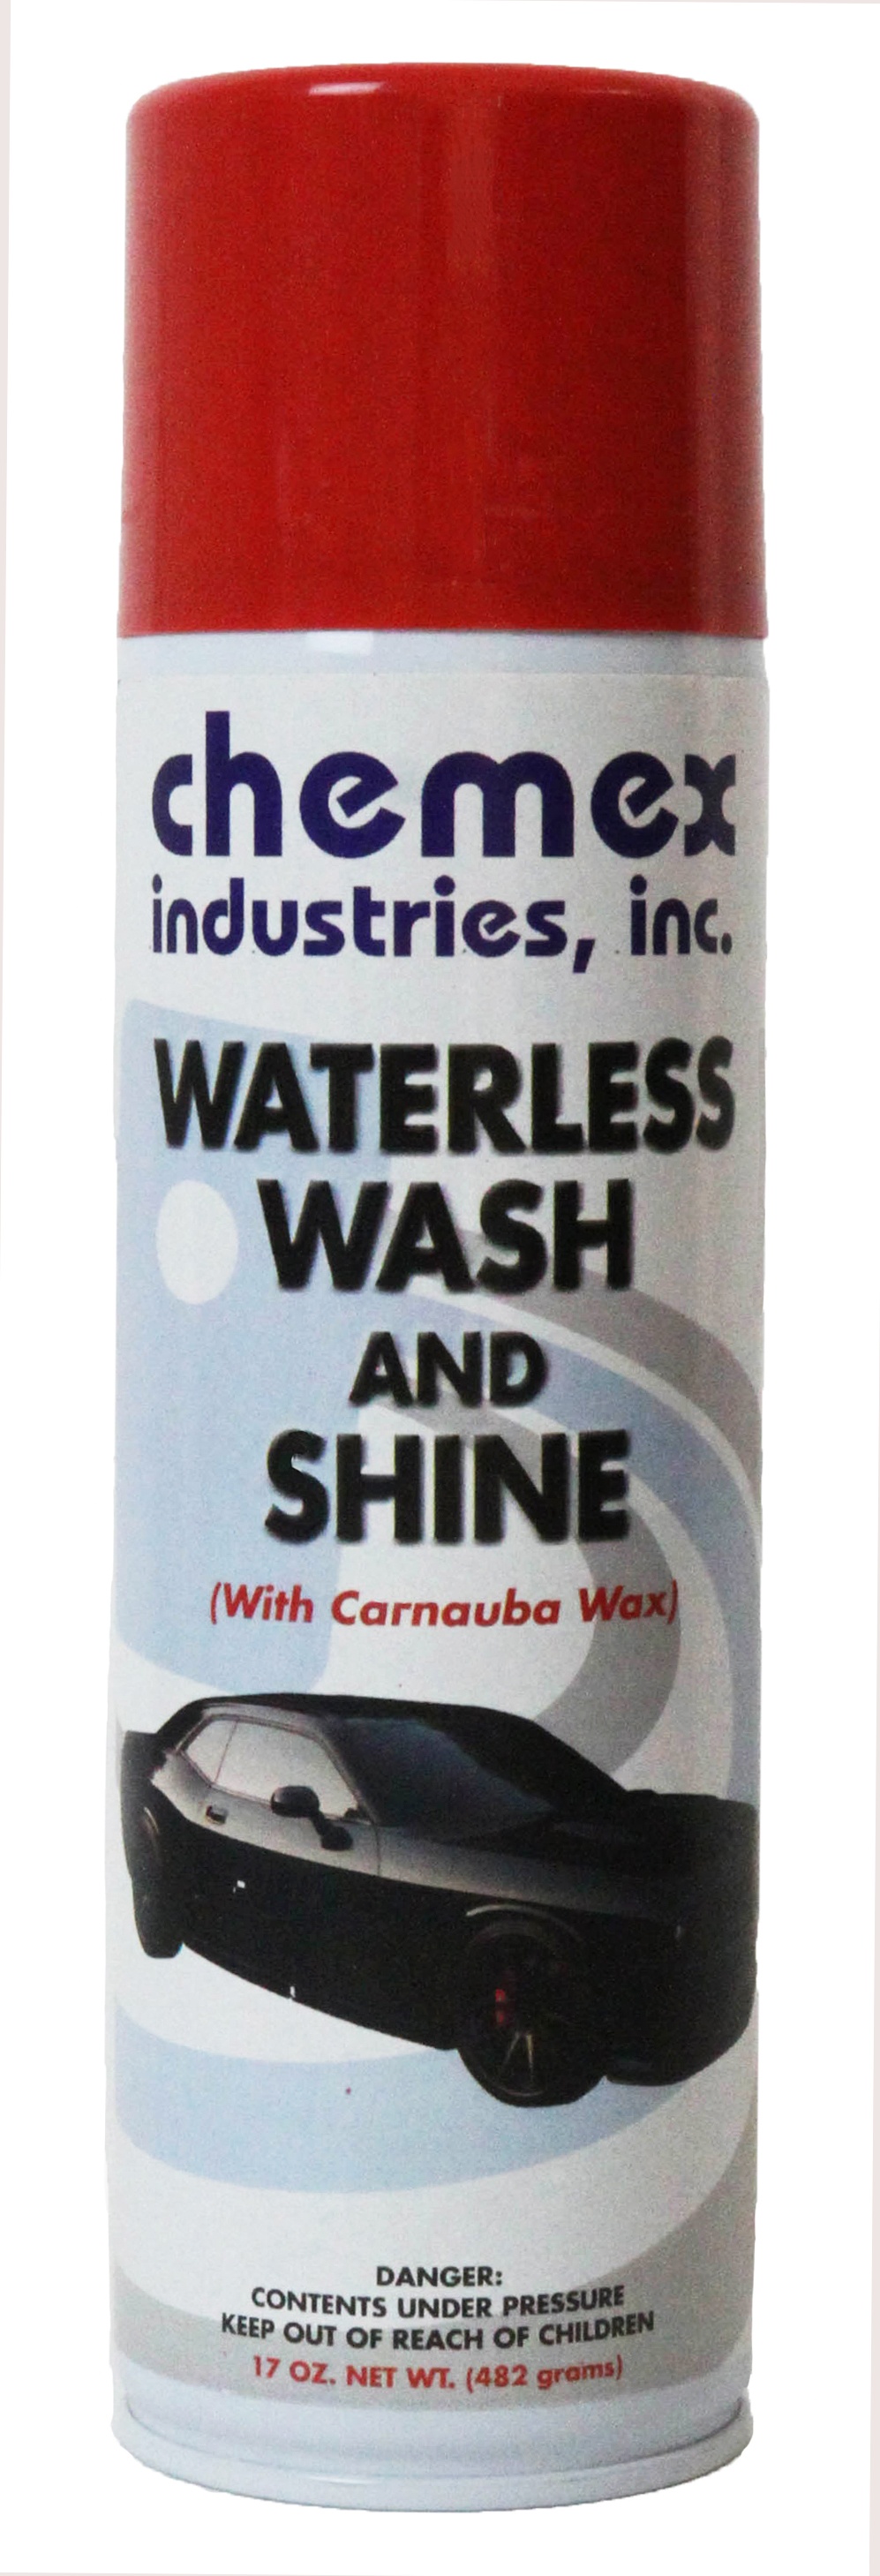 Waterless Wash and Shine_FA_CROPPED